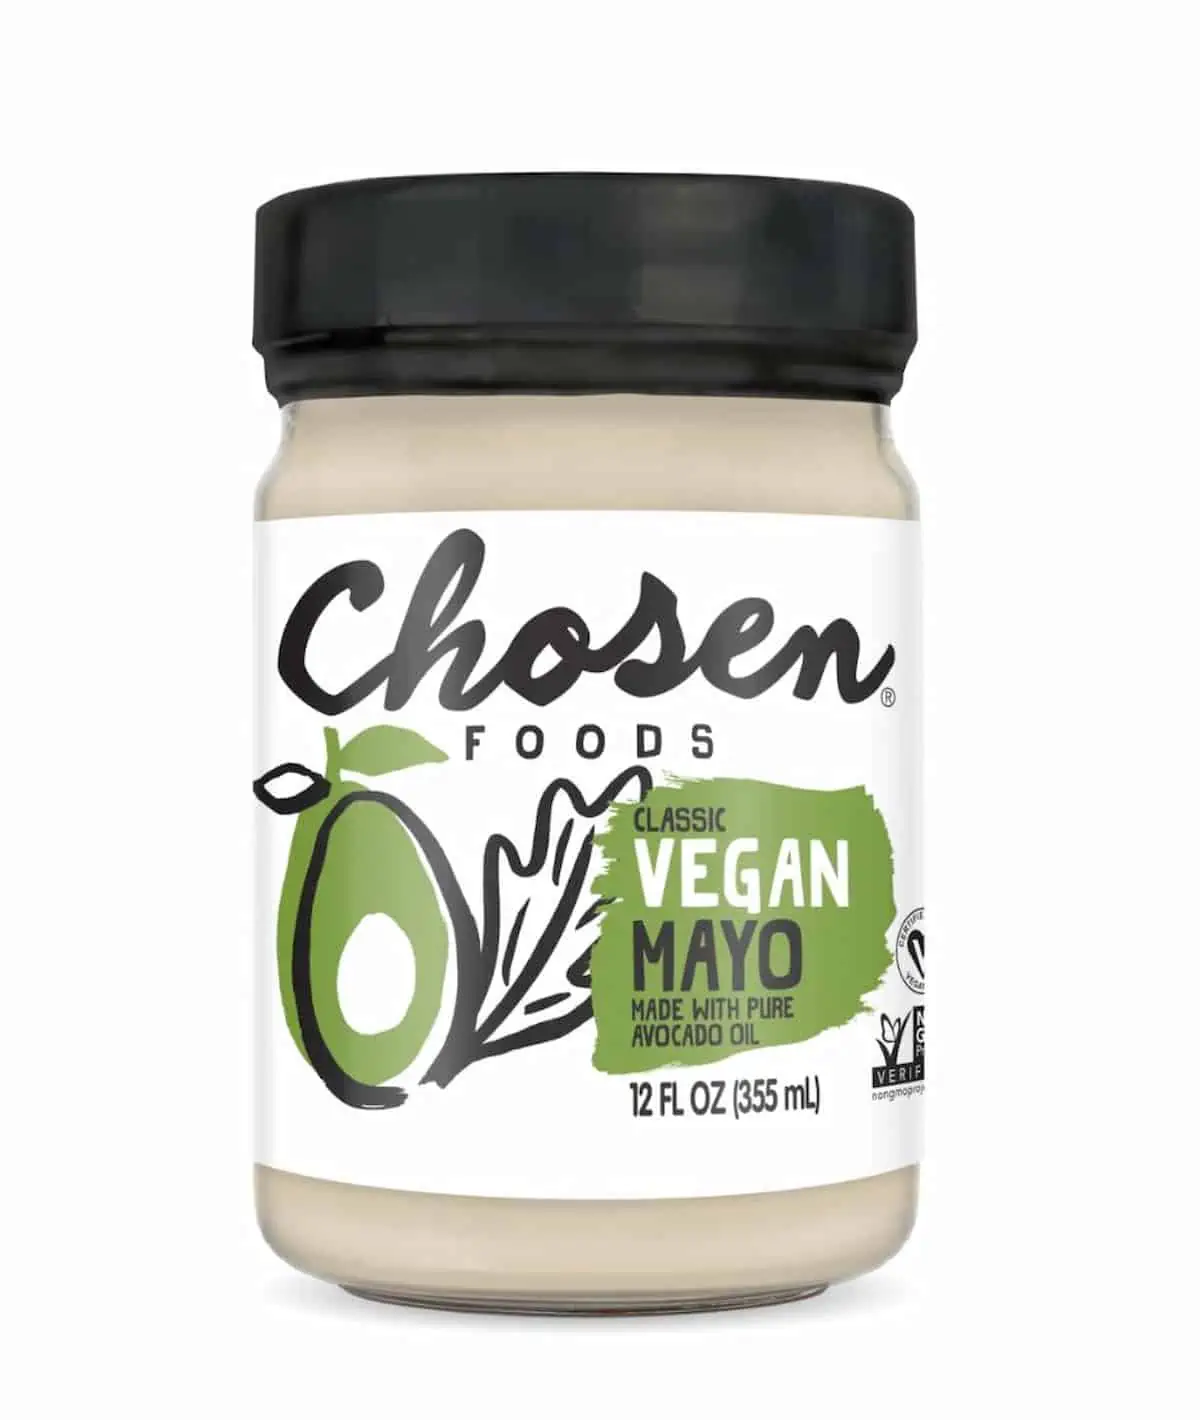 Chosen Foods brand vegan mayo.